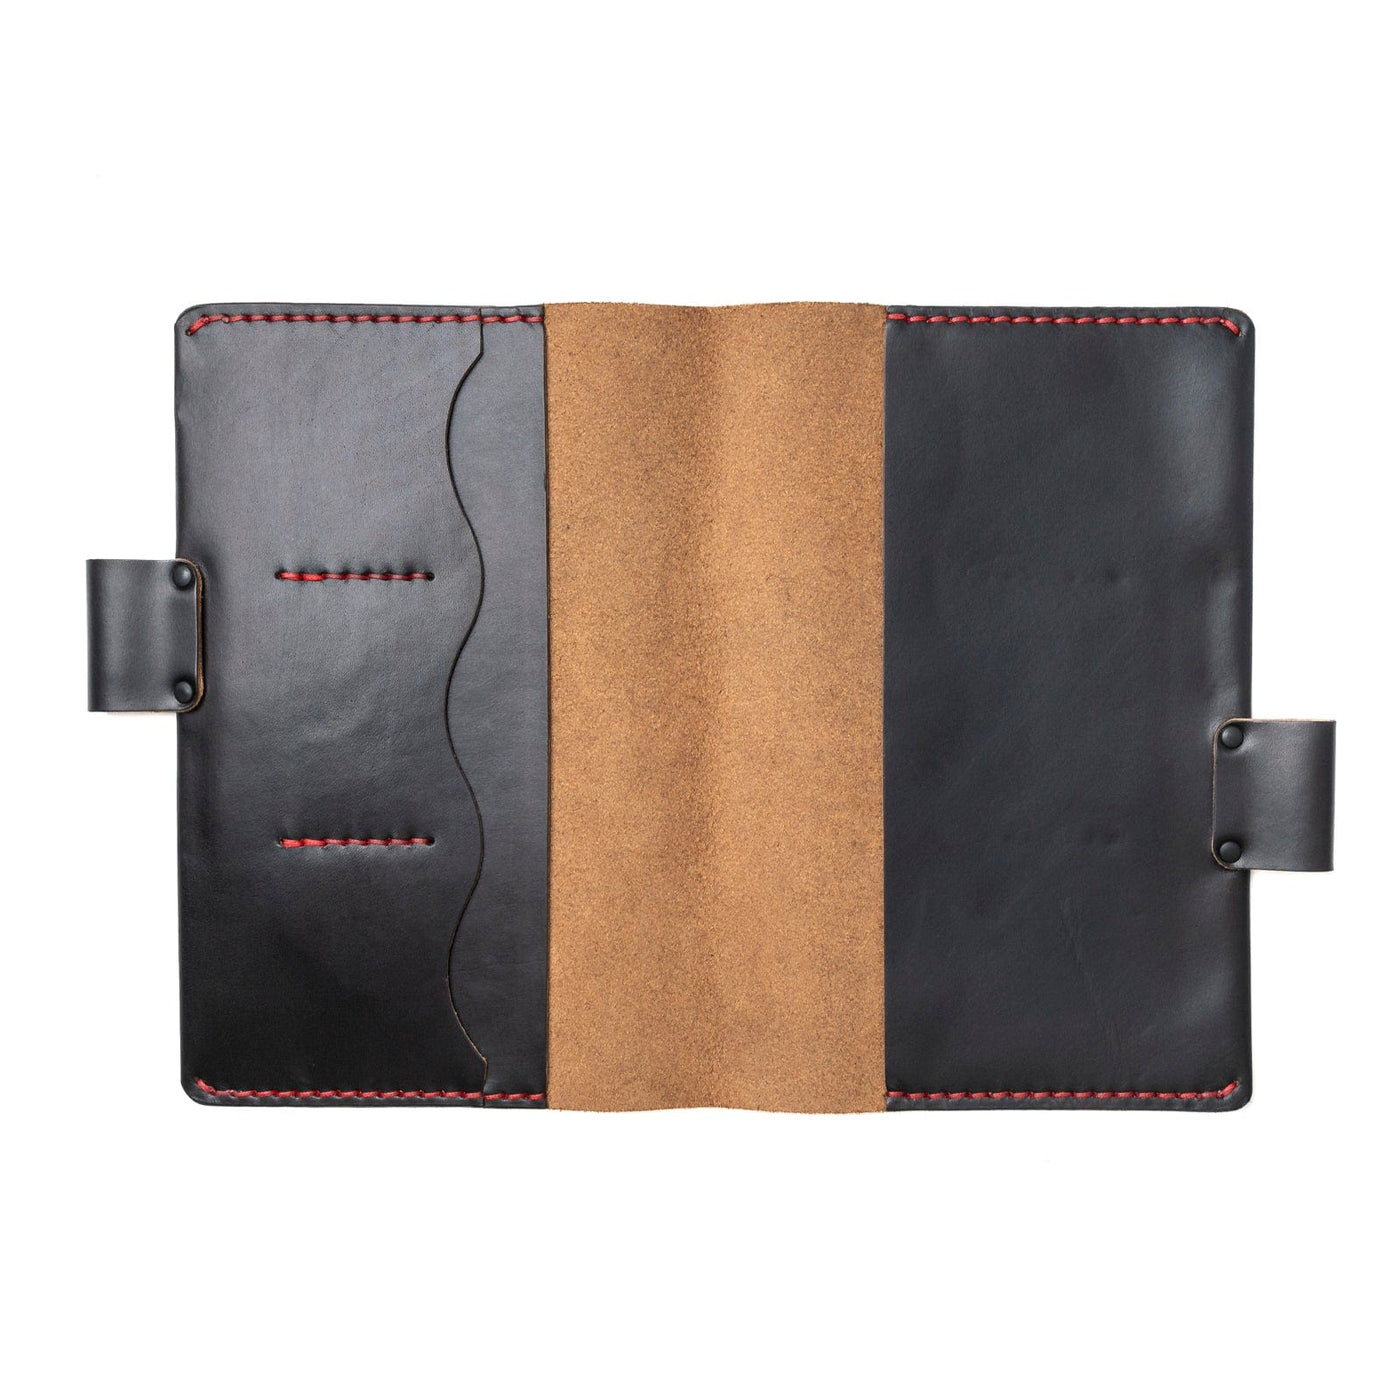 Leather Moleskine Large Notebook Cover - Black Popov Leather